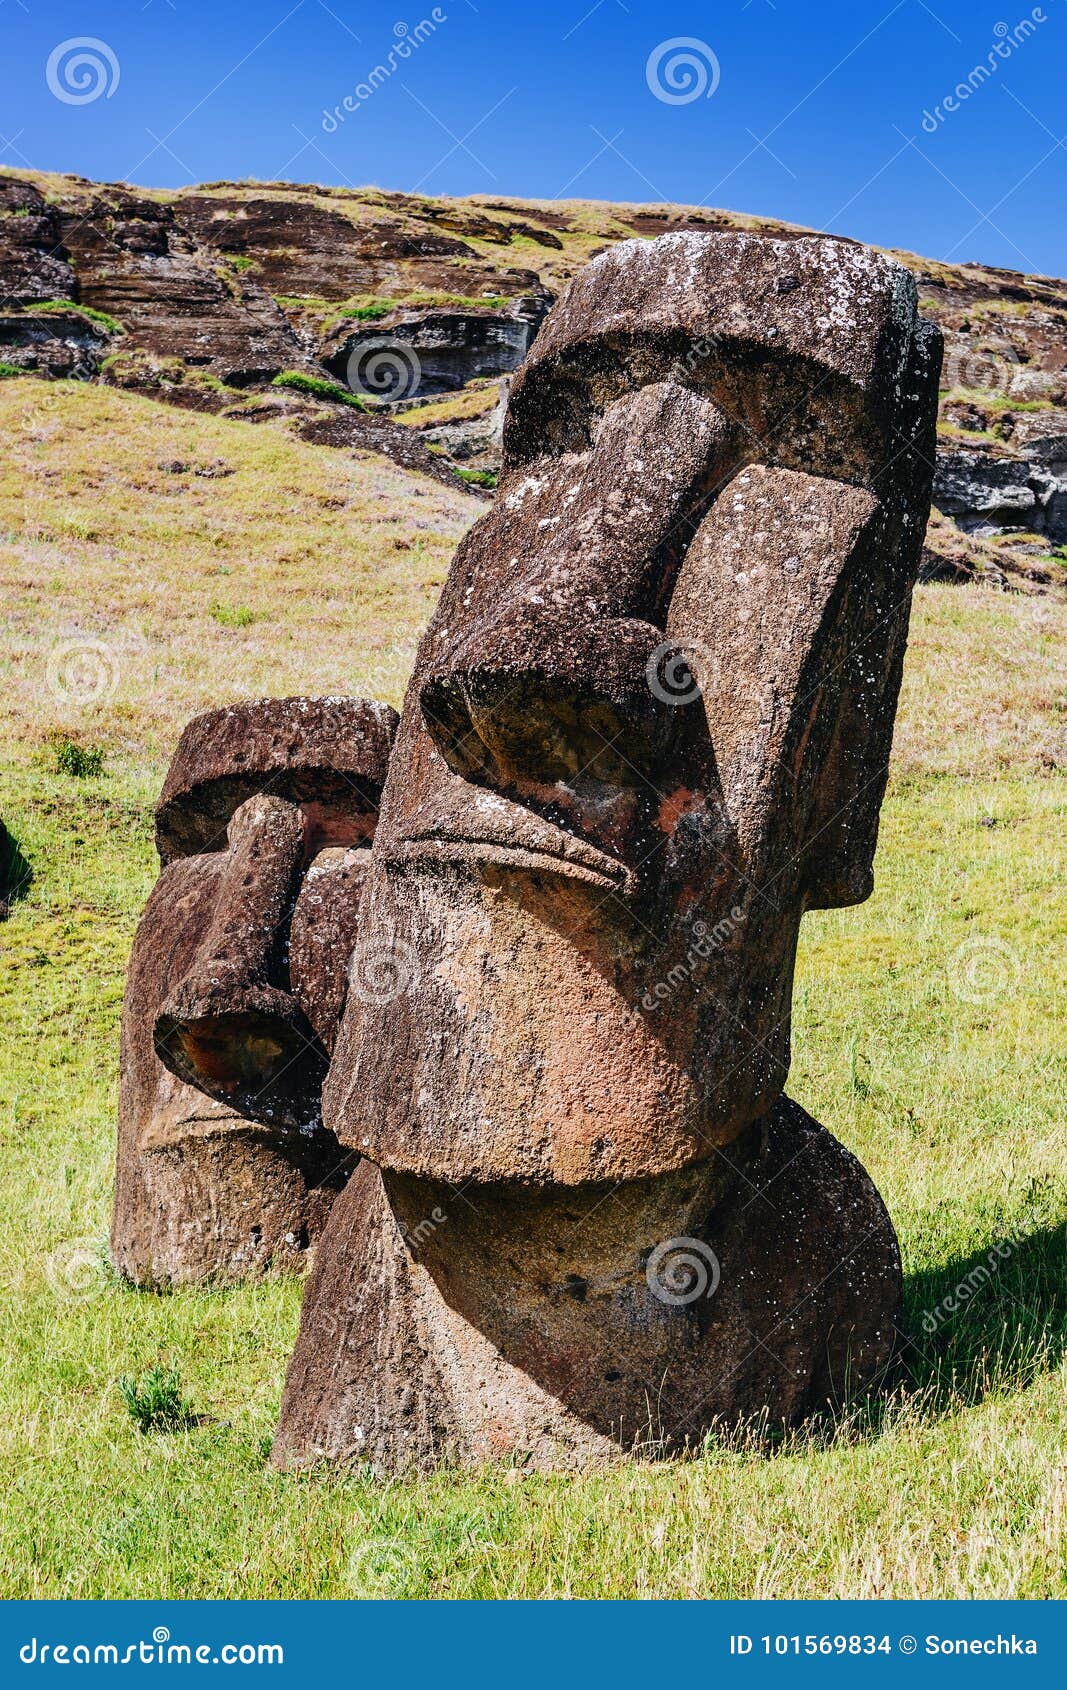 moai statues in the rano raraku volcano in easter island, chile